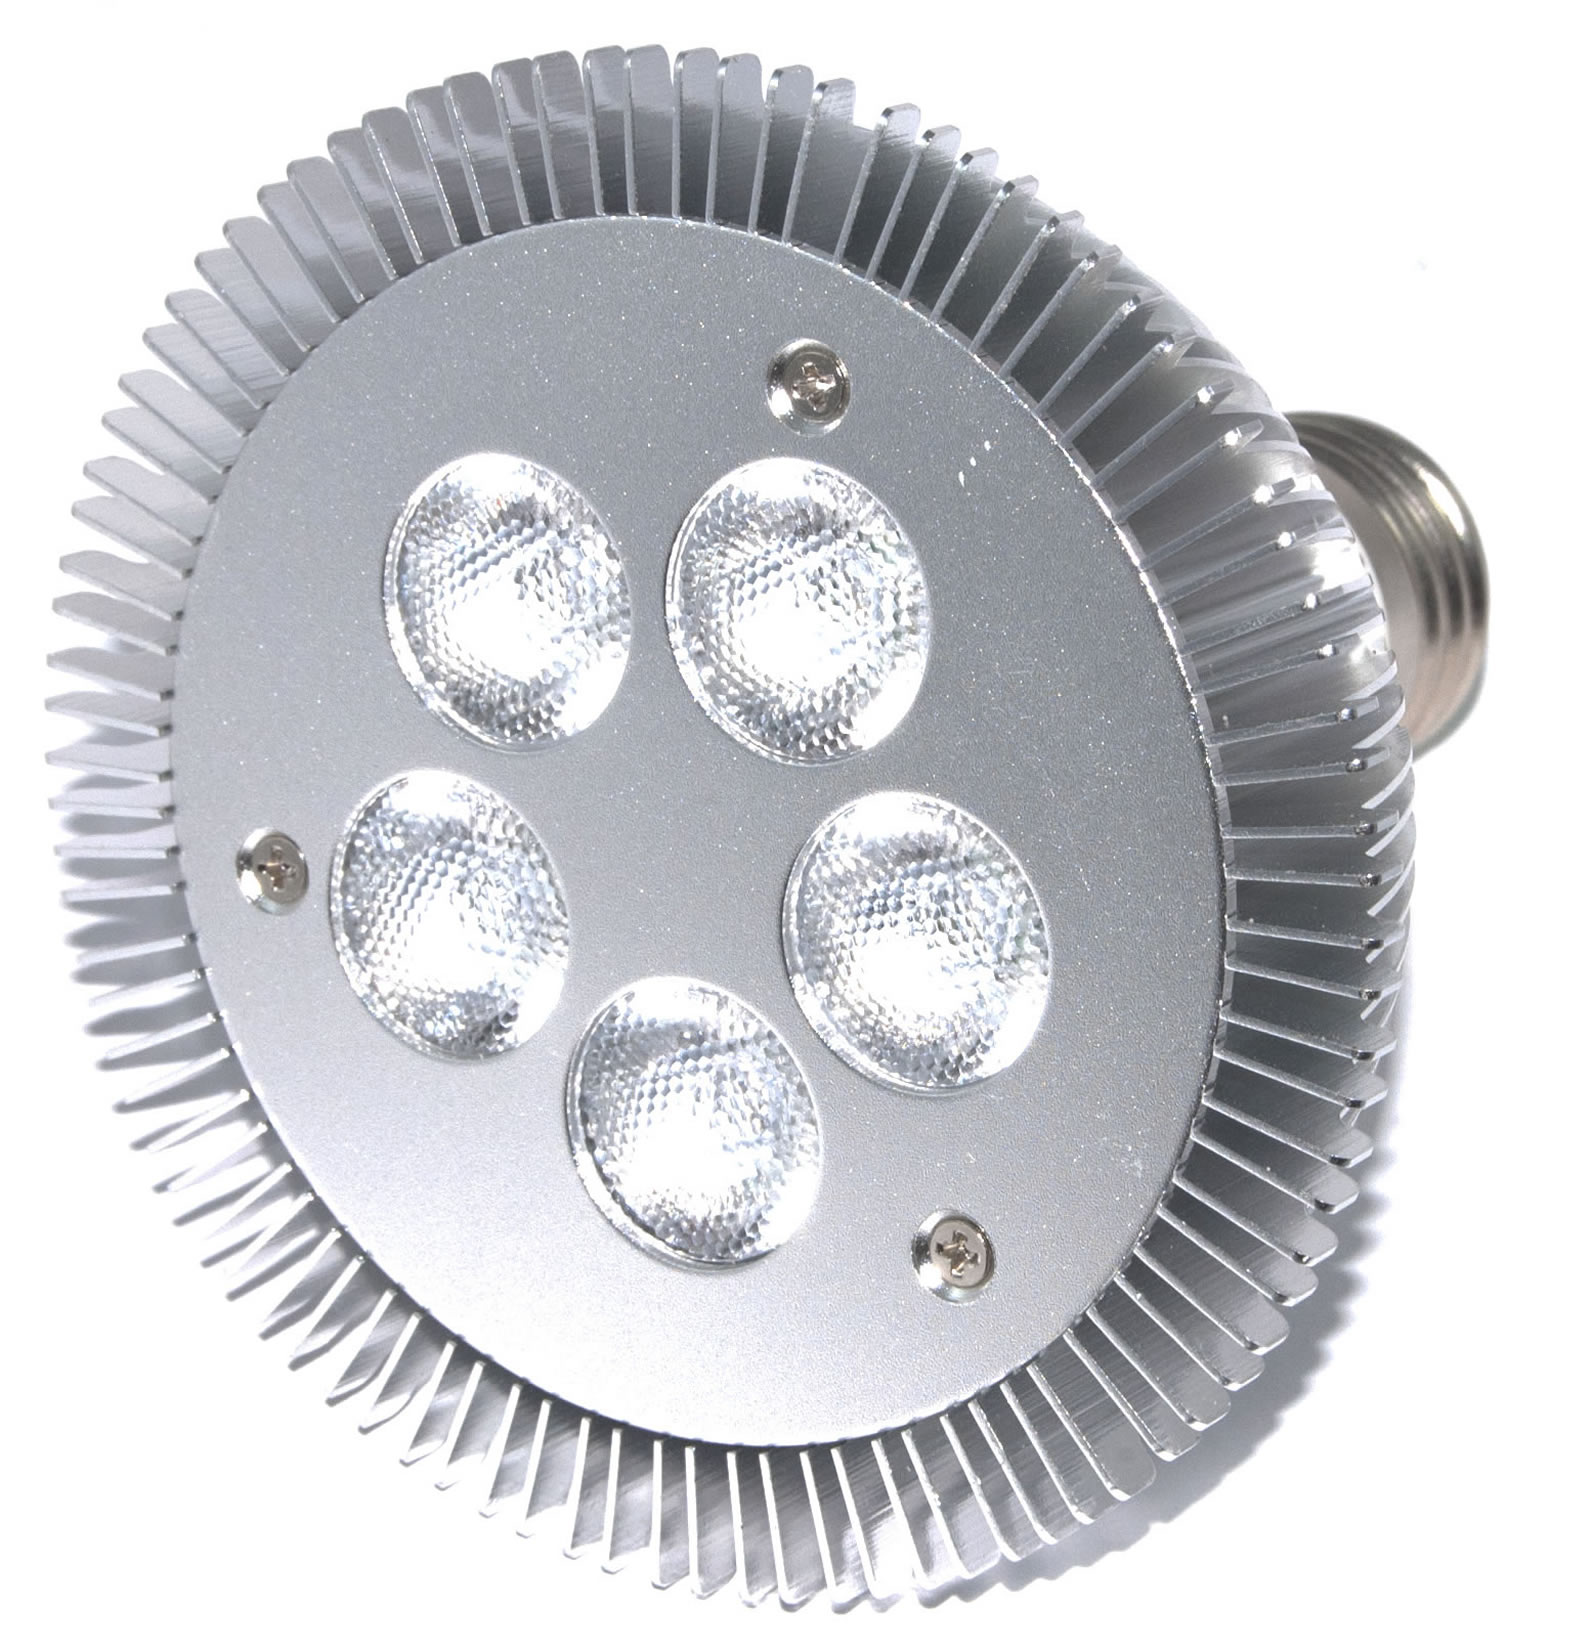 Evacuatie privaat extract PAR30 Powerled 5x3W Power LED Spot CREE 15 watt Warm wit |  Powerled-verlichting